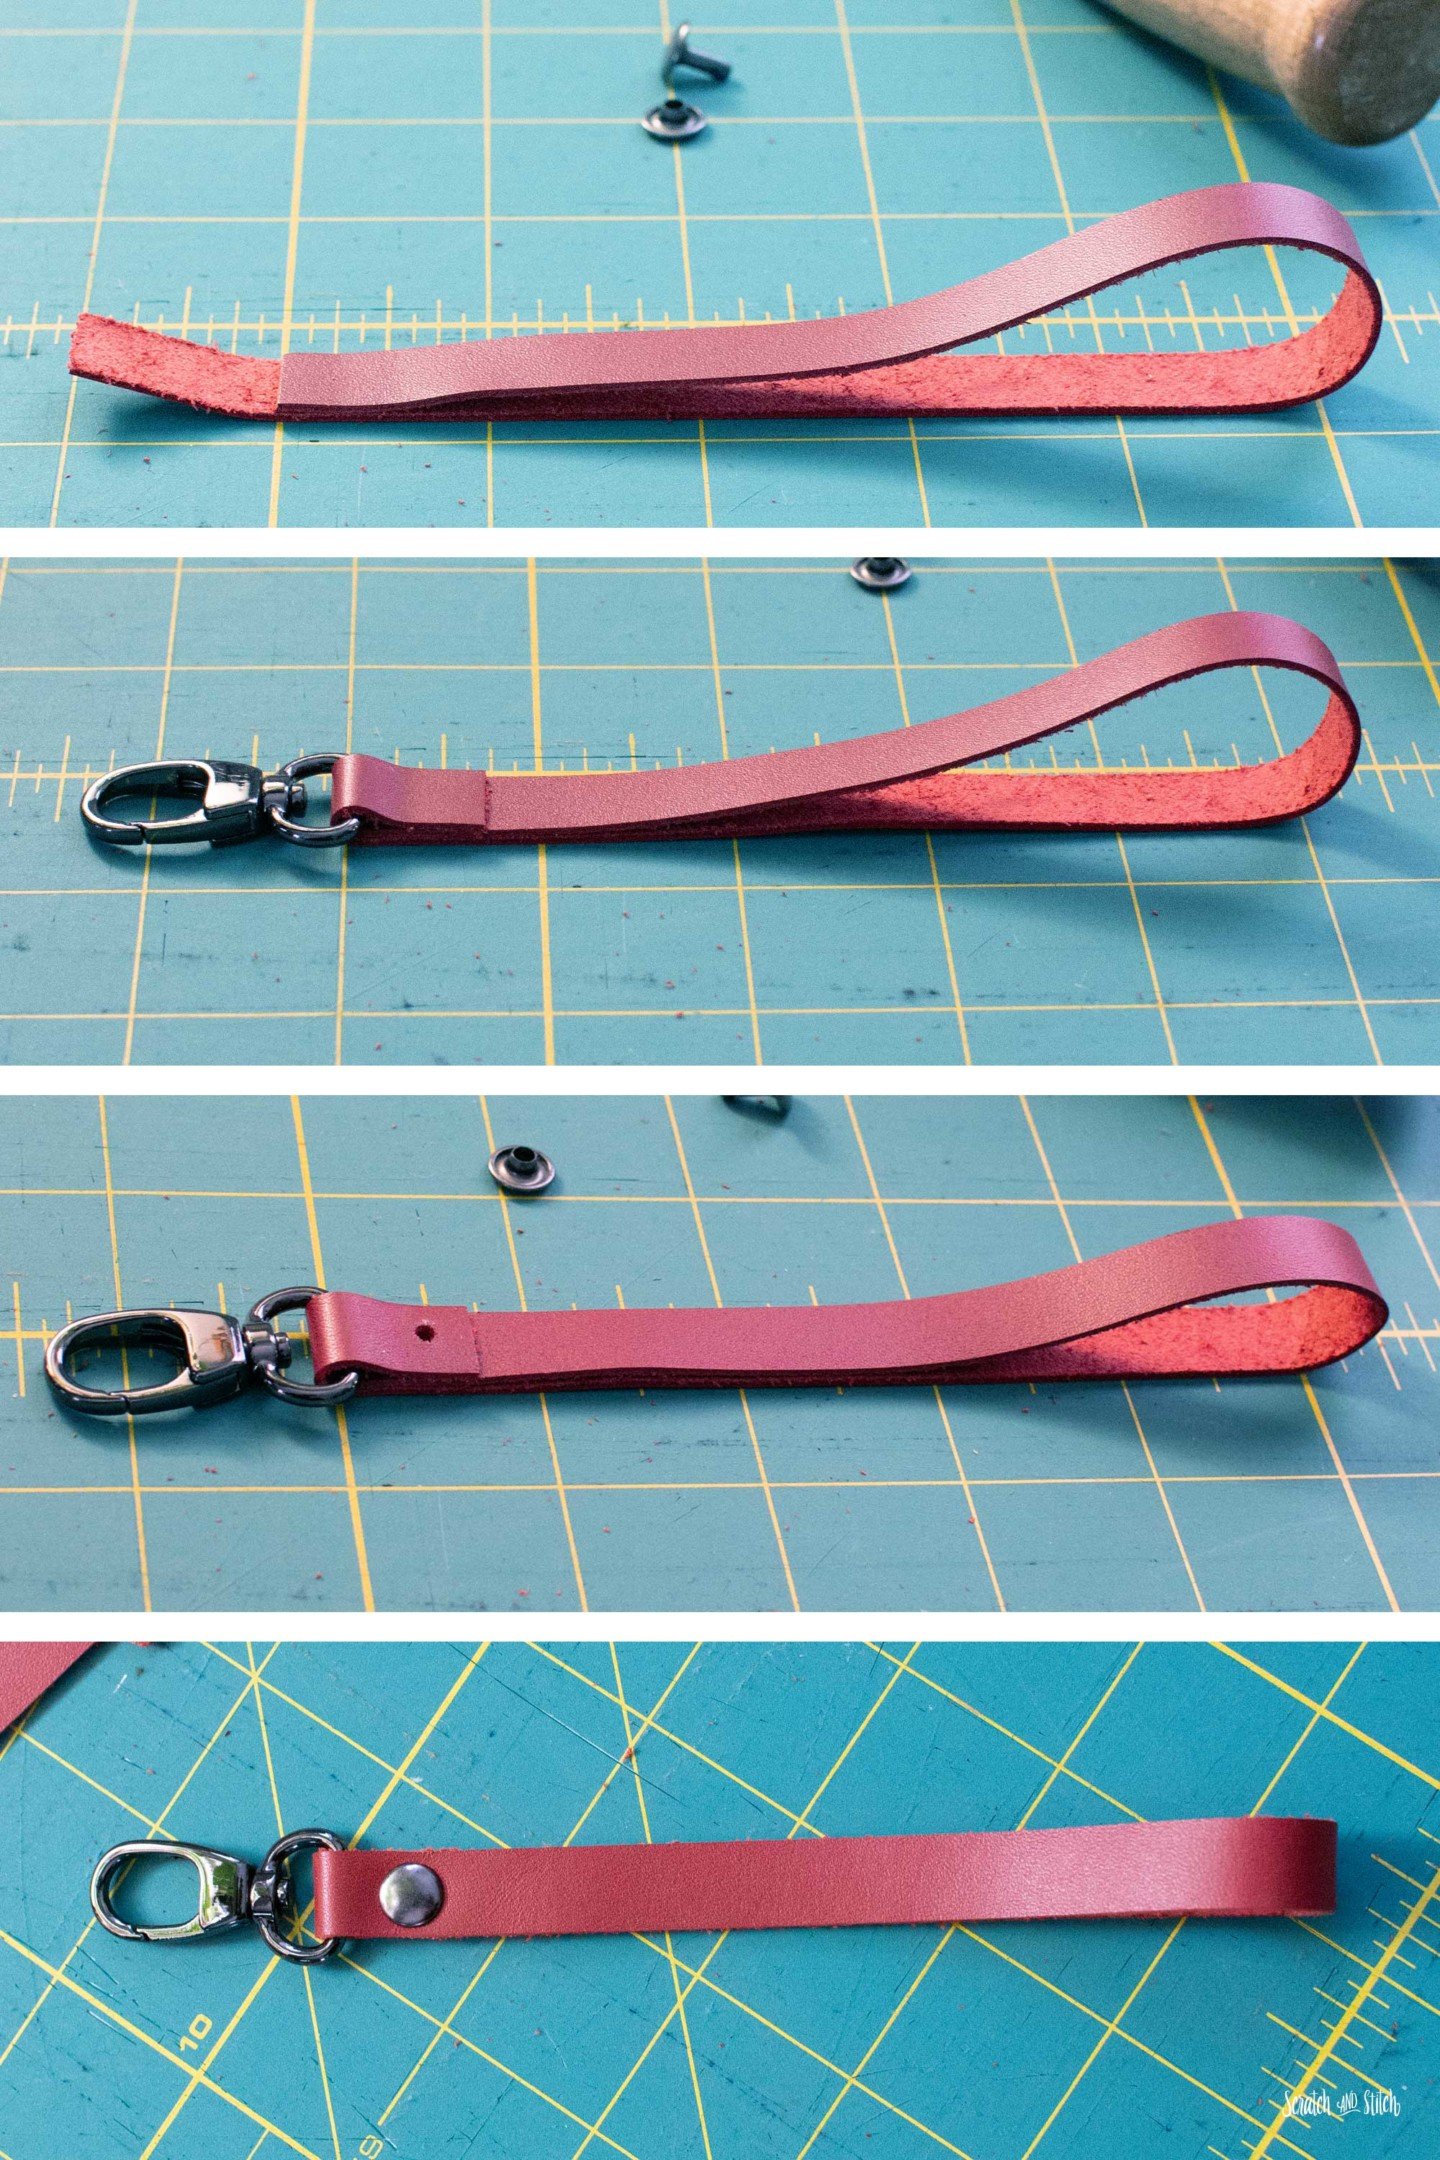 XOXO Leather Wristlet | PDF + SVG | Scratch and Stitch